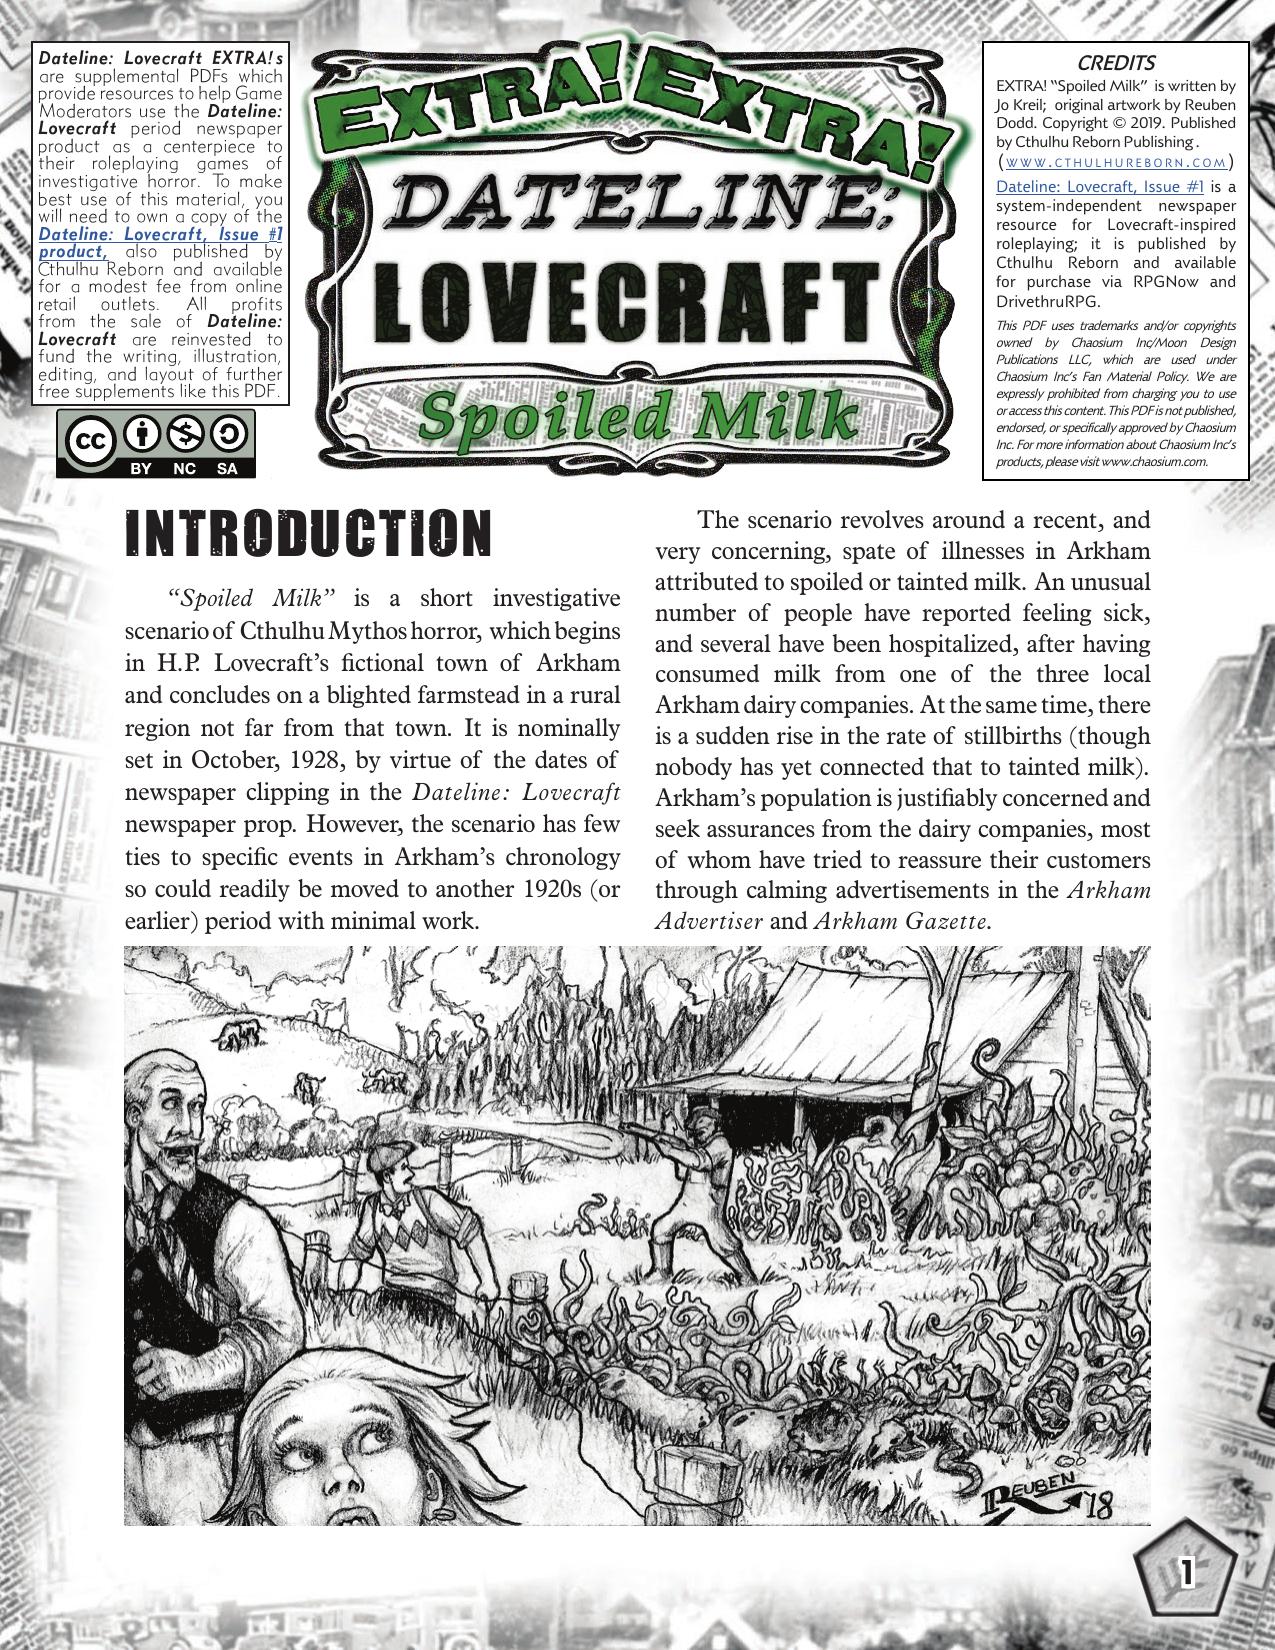 Dateline Lovecraft - Issue #1 - EXTRA!